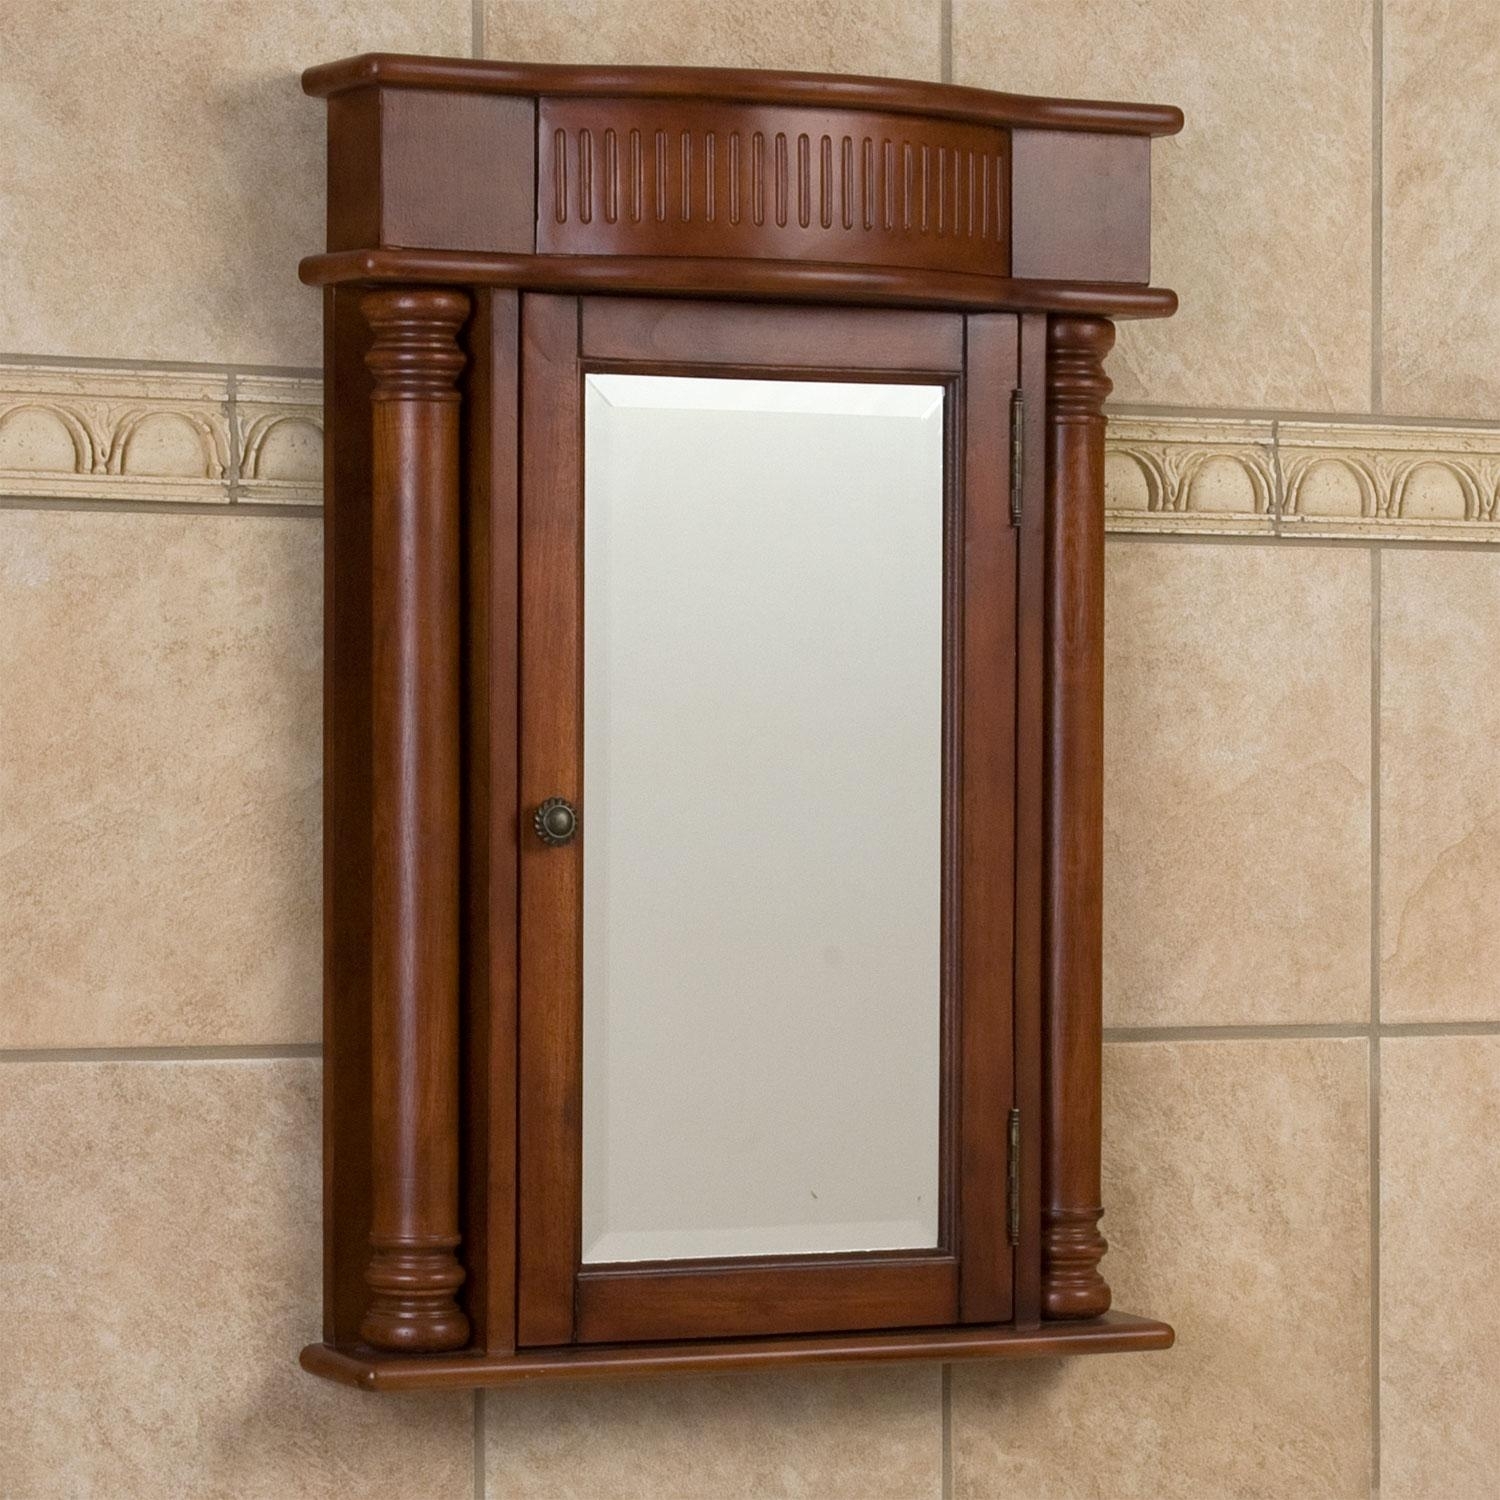 George washington vanity bathroom medicine cabinets images with wooden